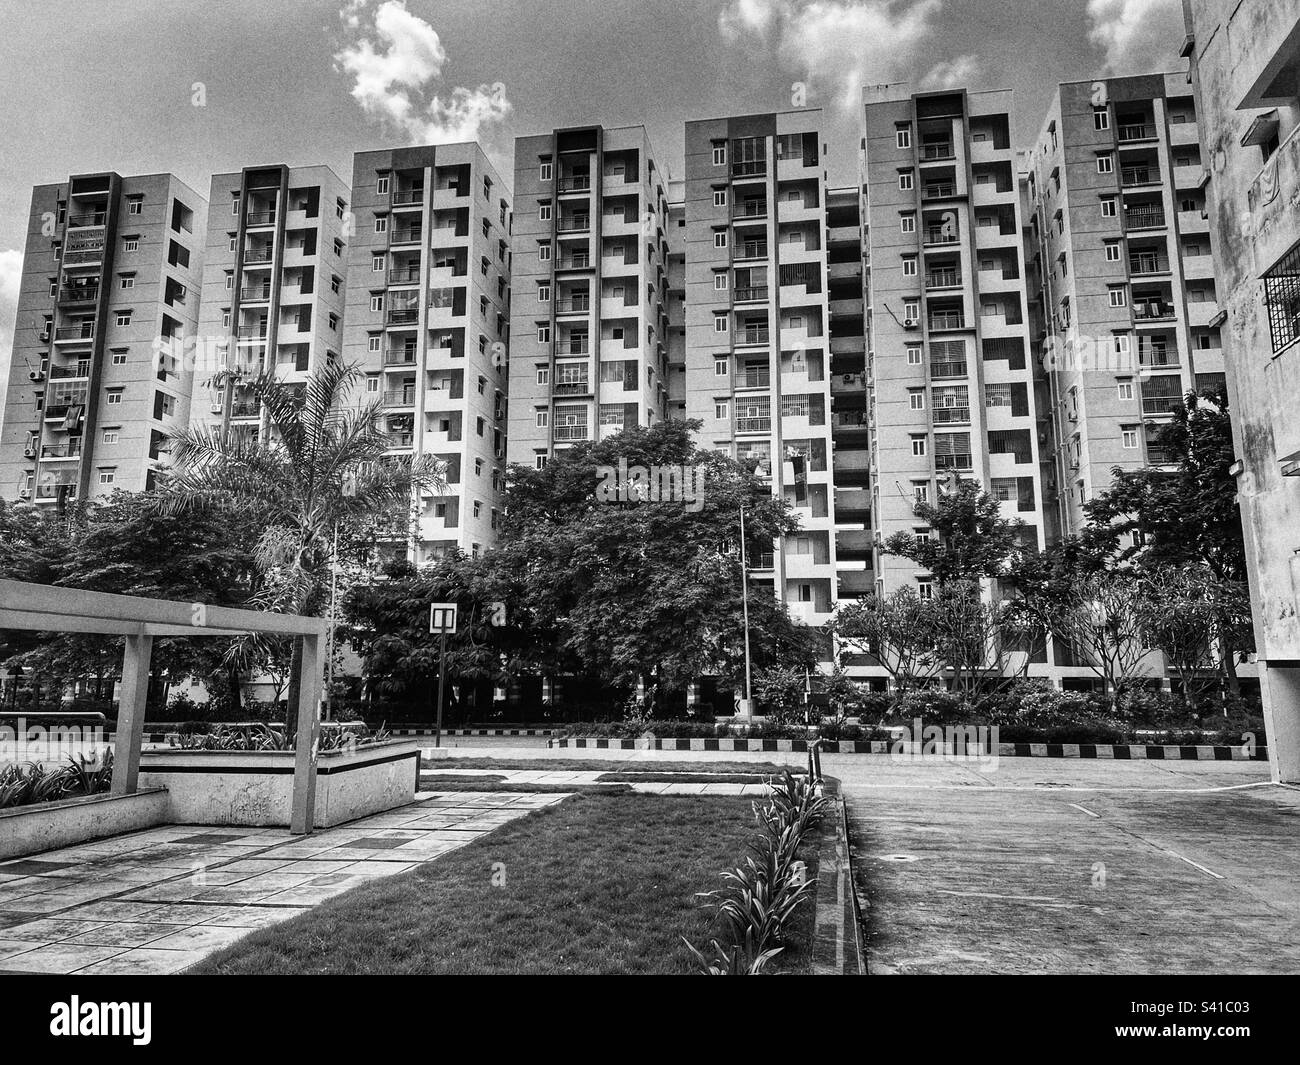 Apartments. Concrete jungle. Urban buildings Stock Photo